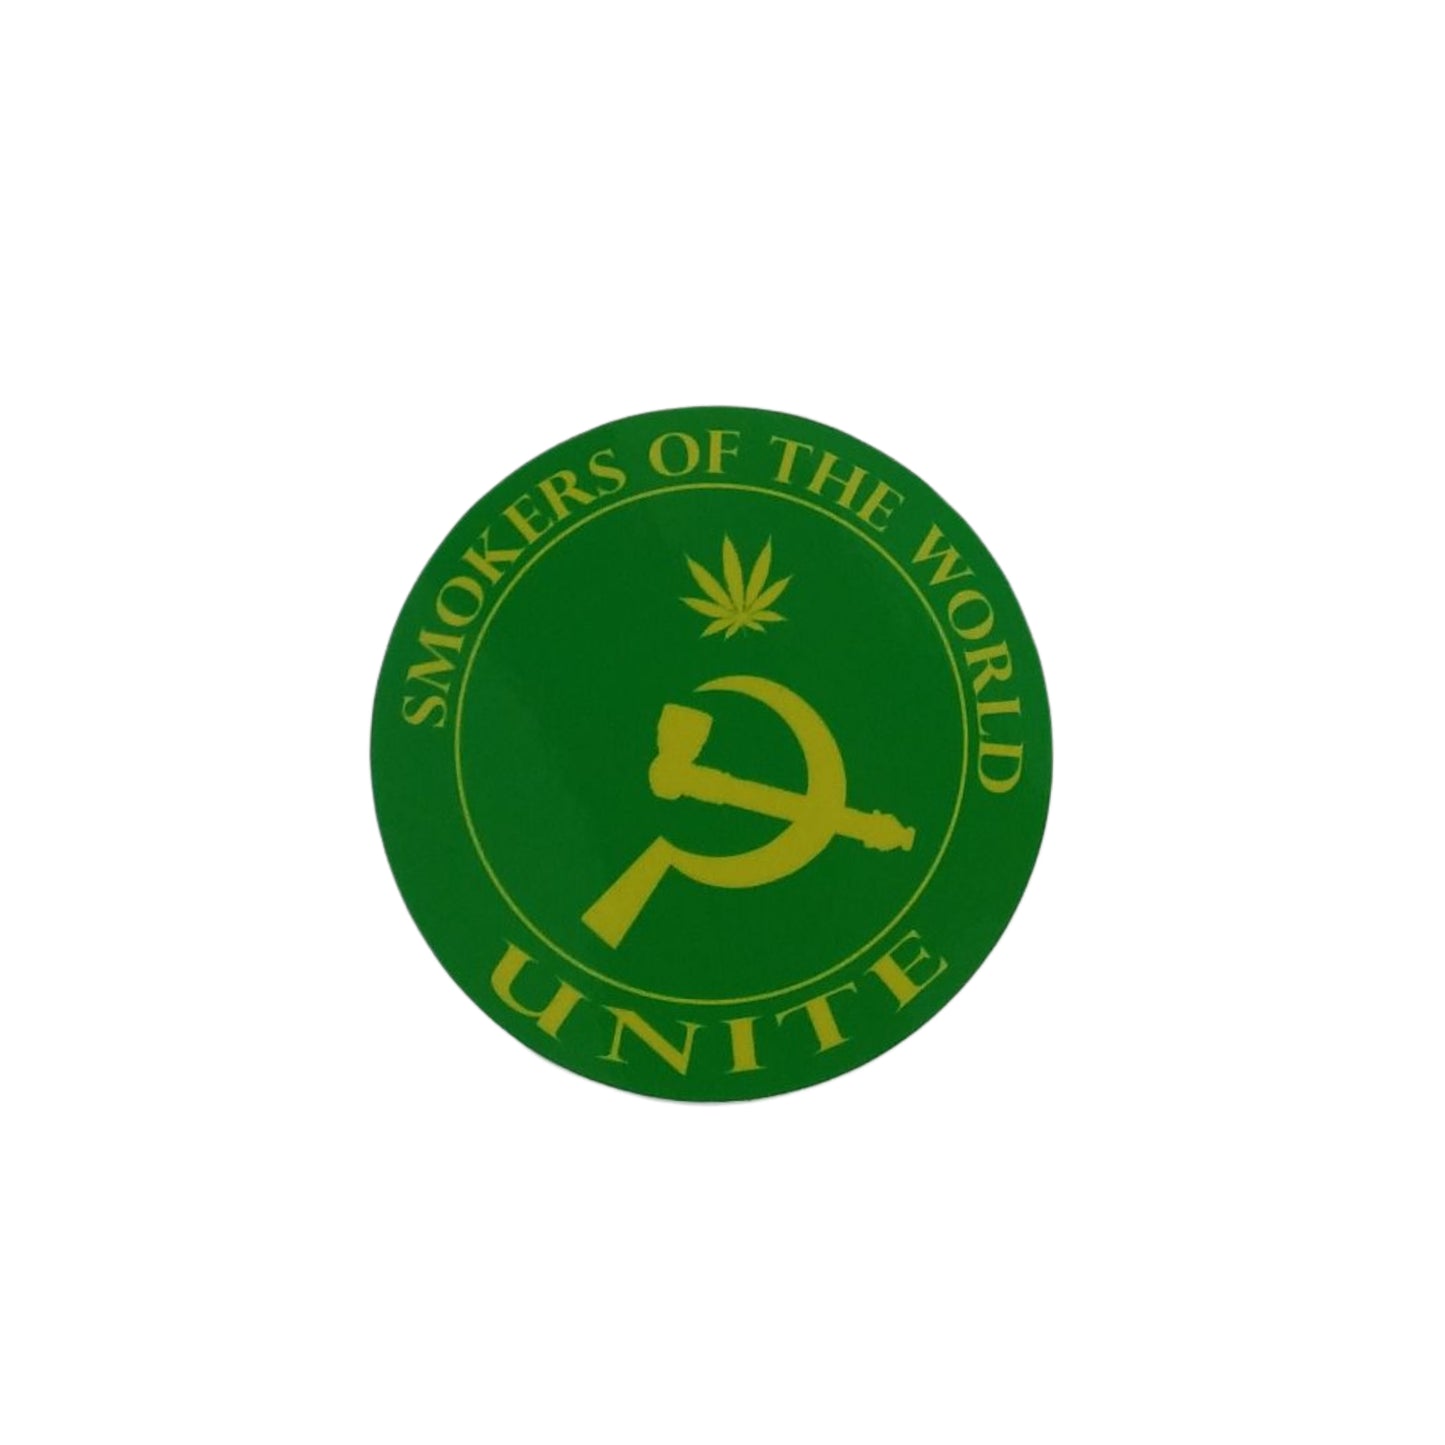 Communist Symbol Style Smokers of the World Unite - Sticker